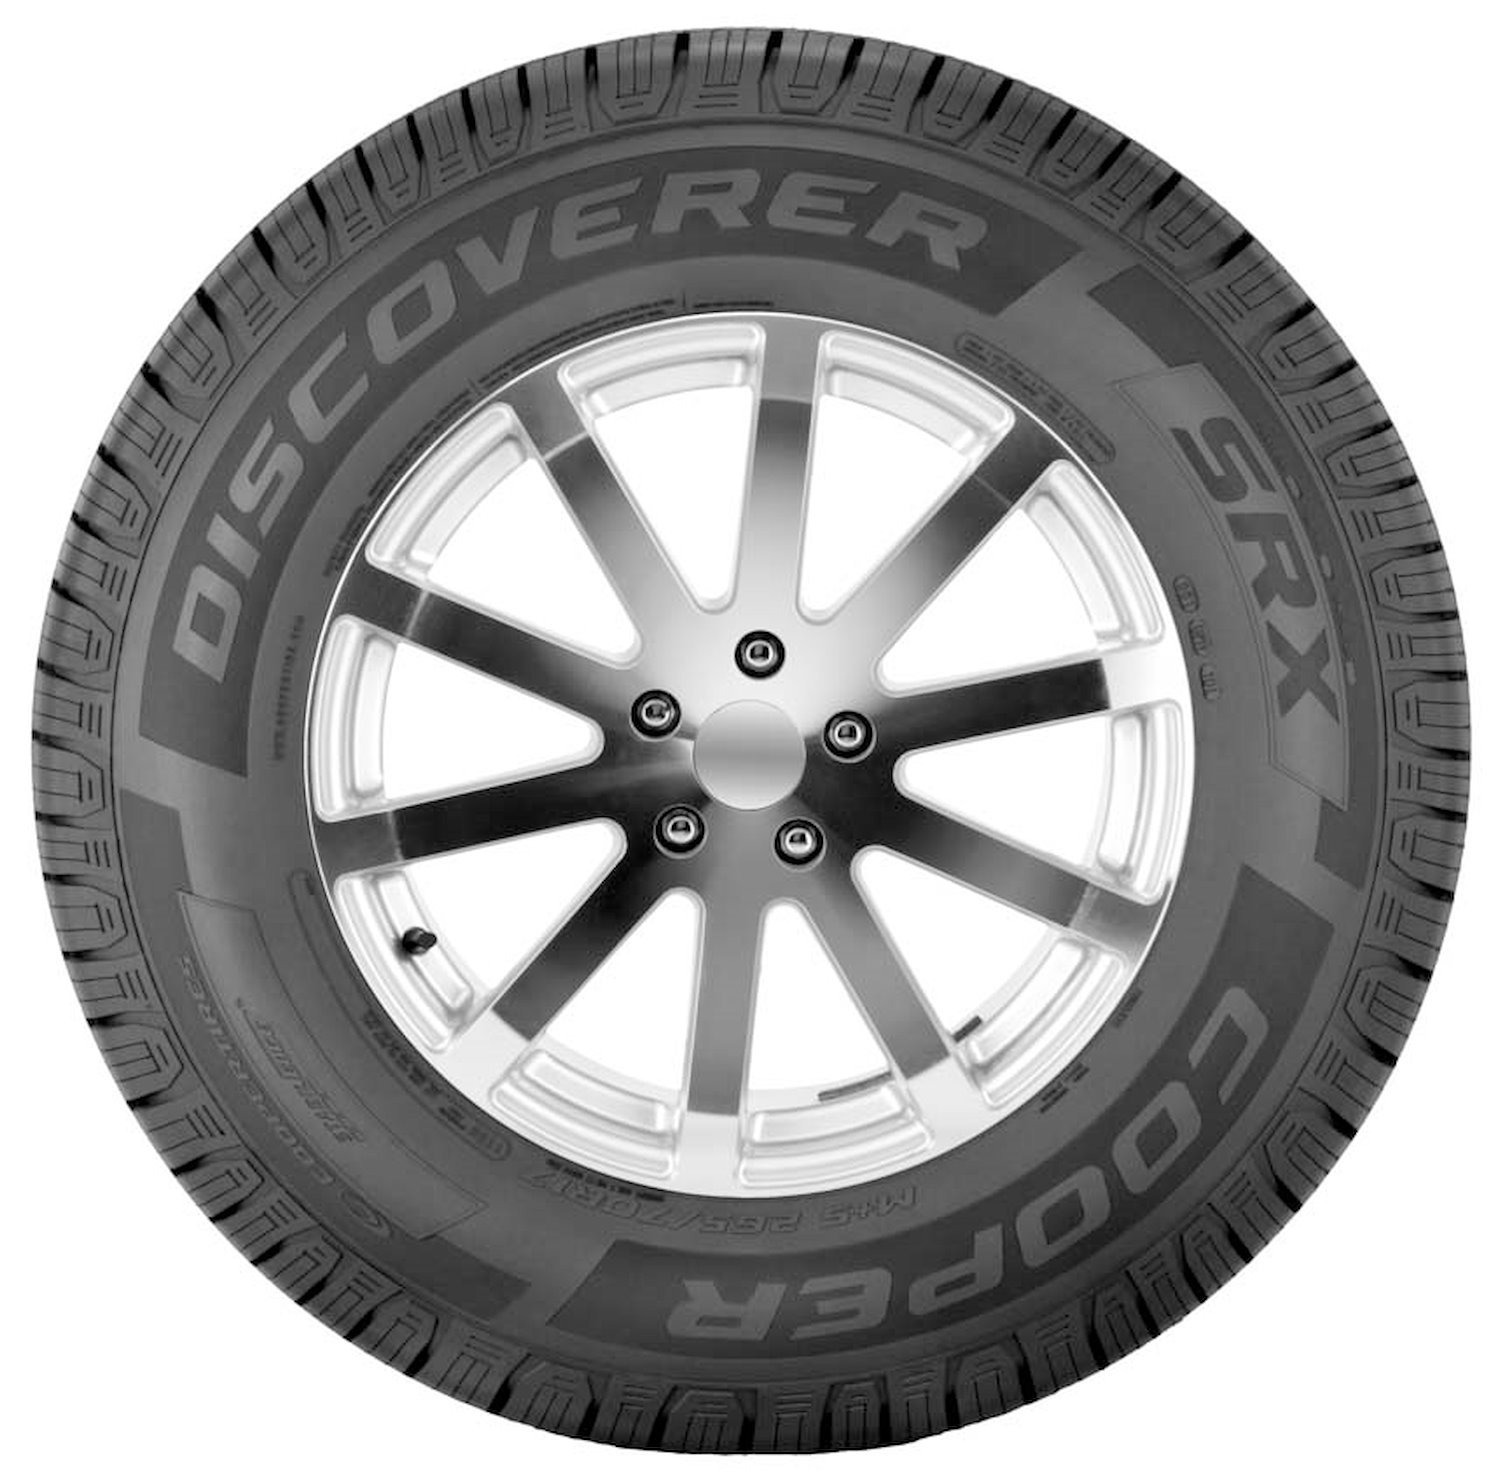 Discoverer SRX Commuter/Touring Tire, 265/70R16